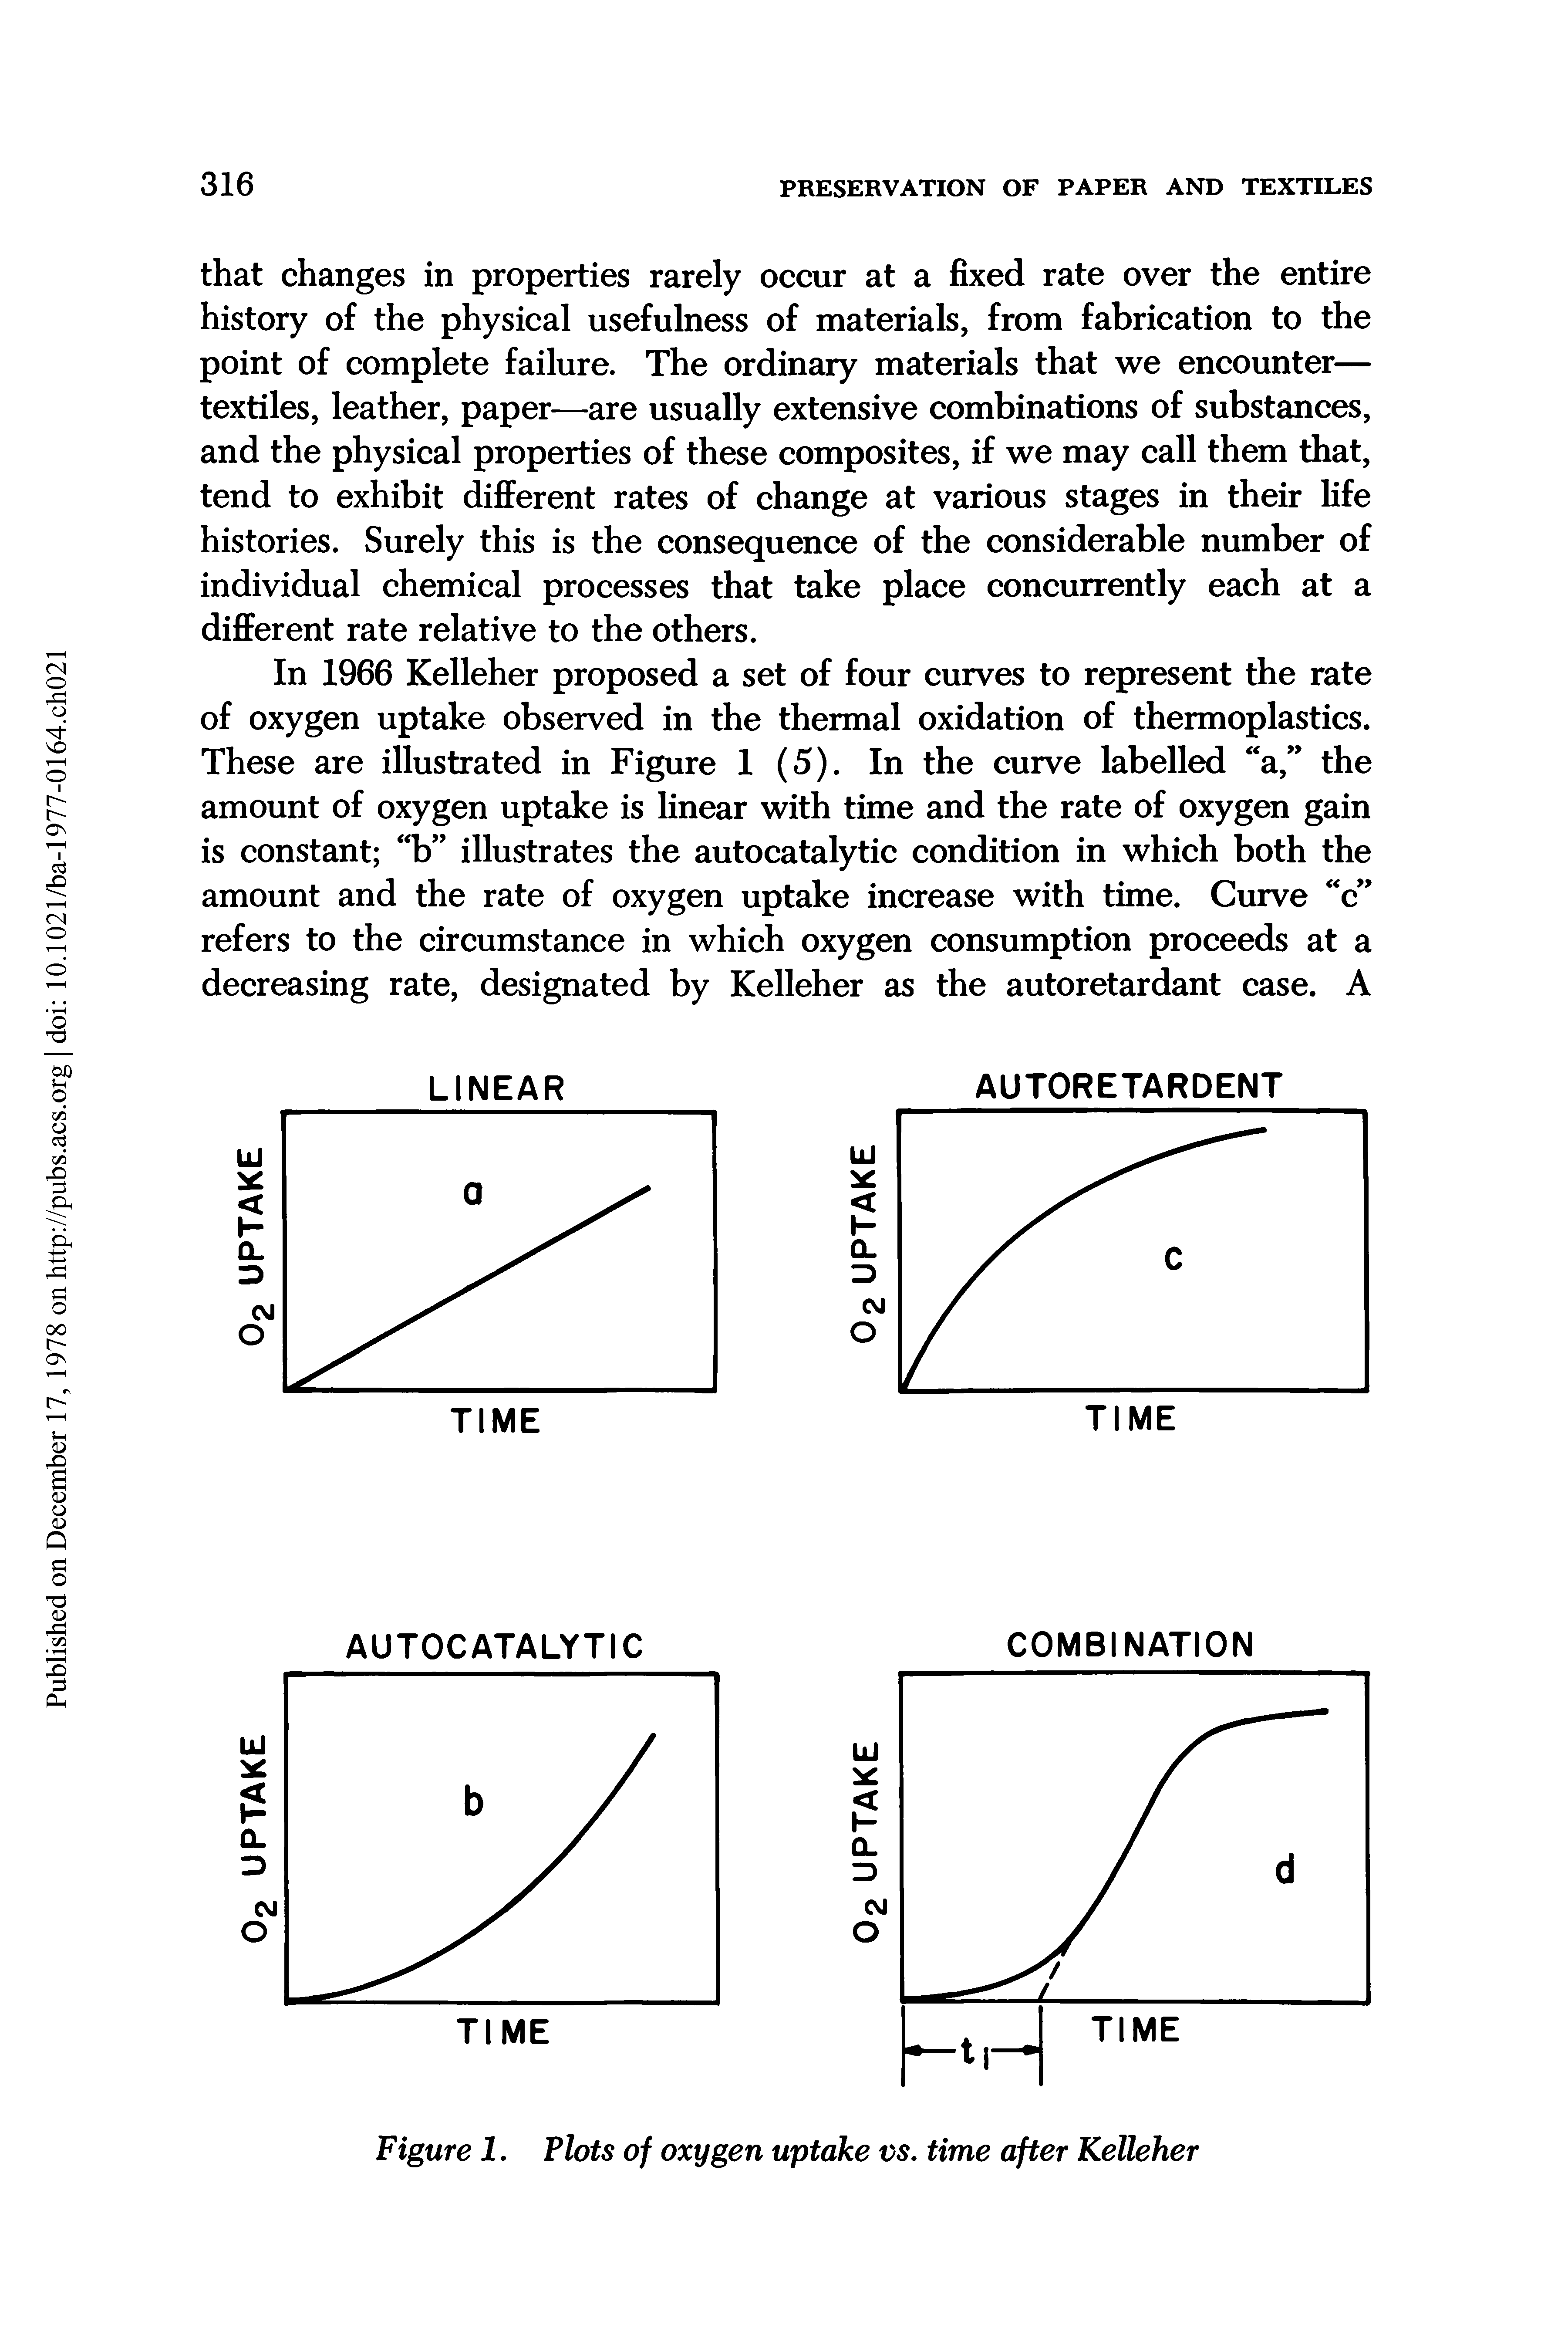 Figure 1. Plots of oxygen uptake vs. time after Kelleher...